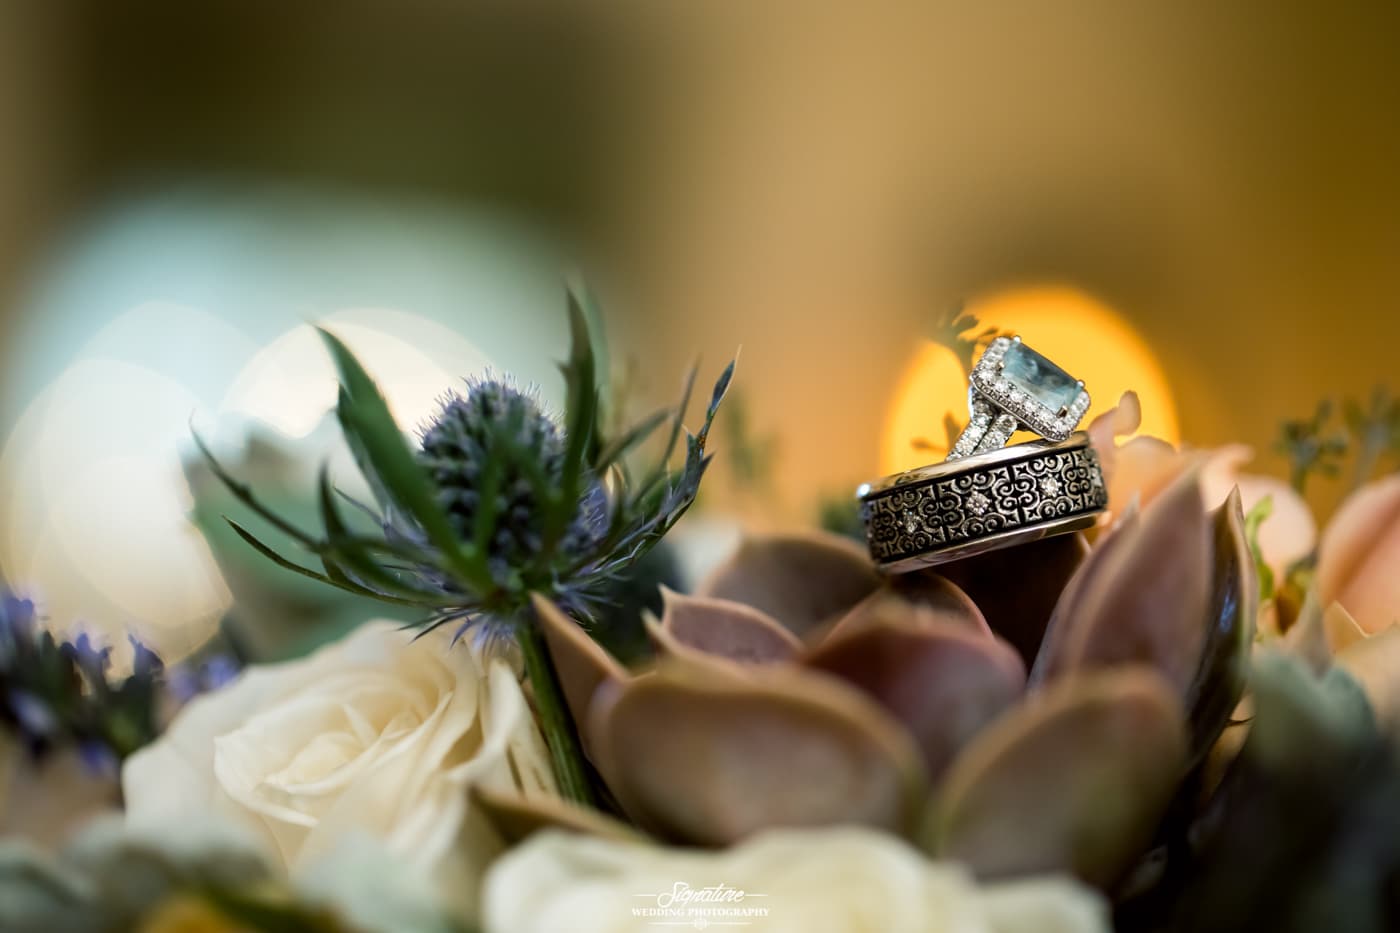 Wedding rings on flower bouquet